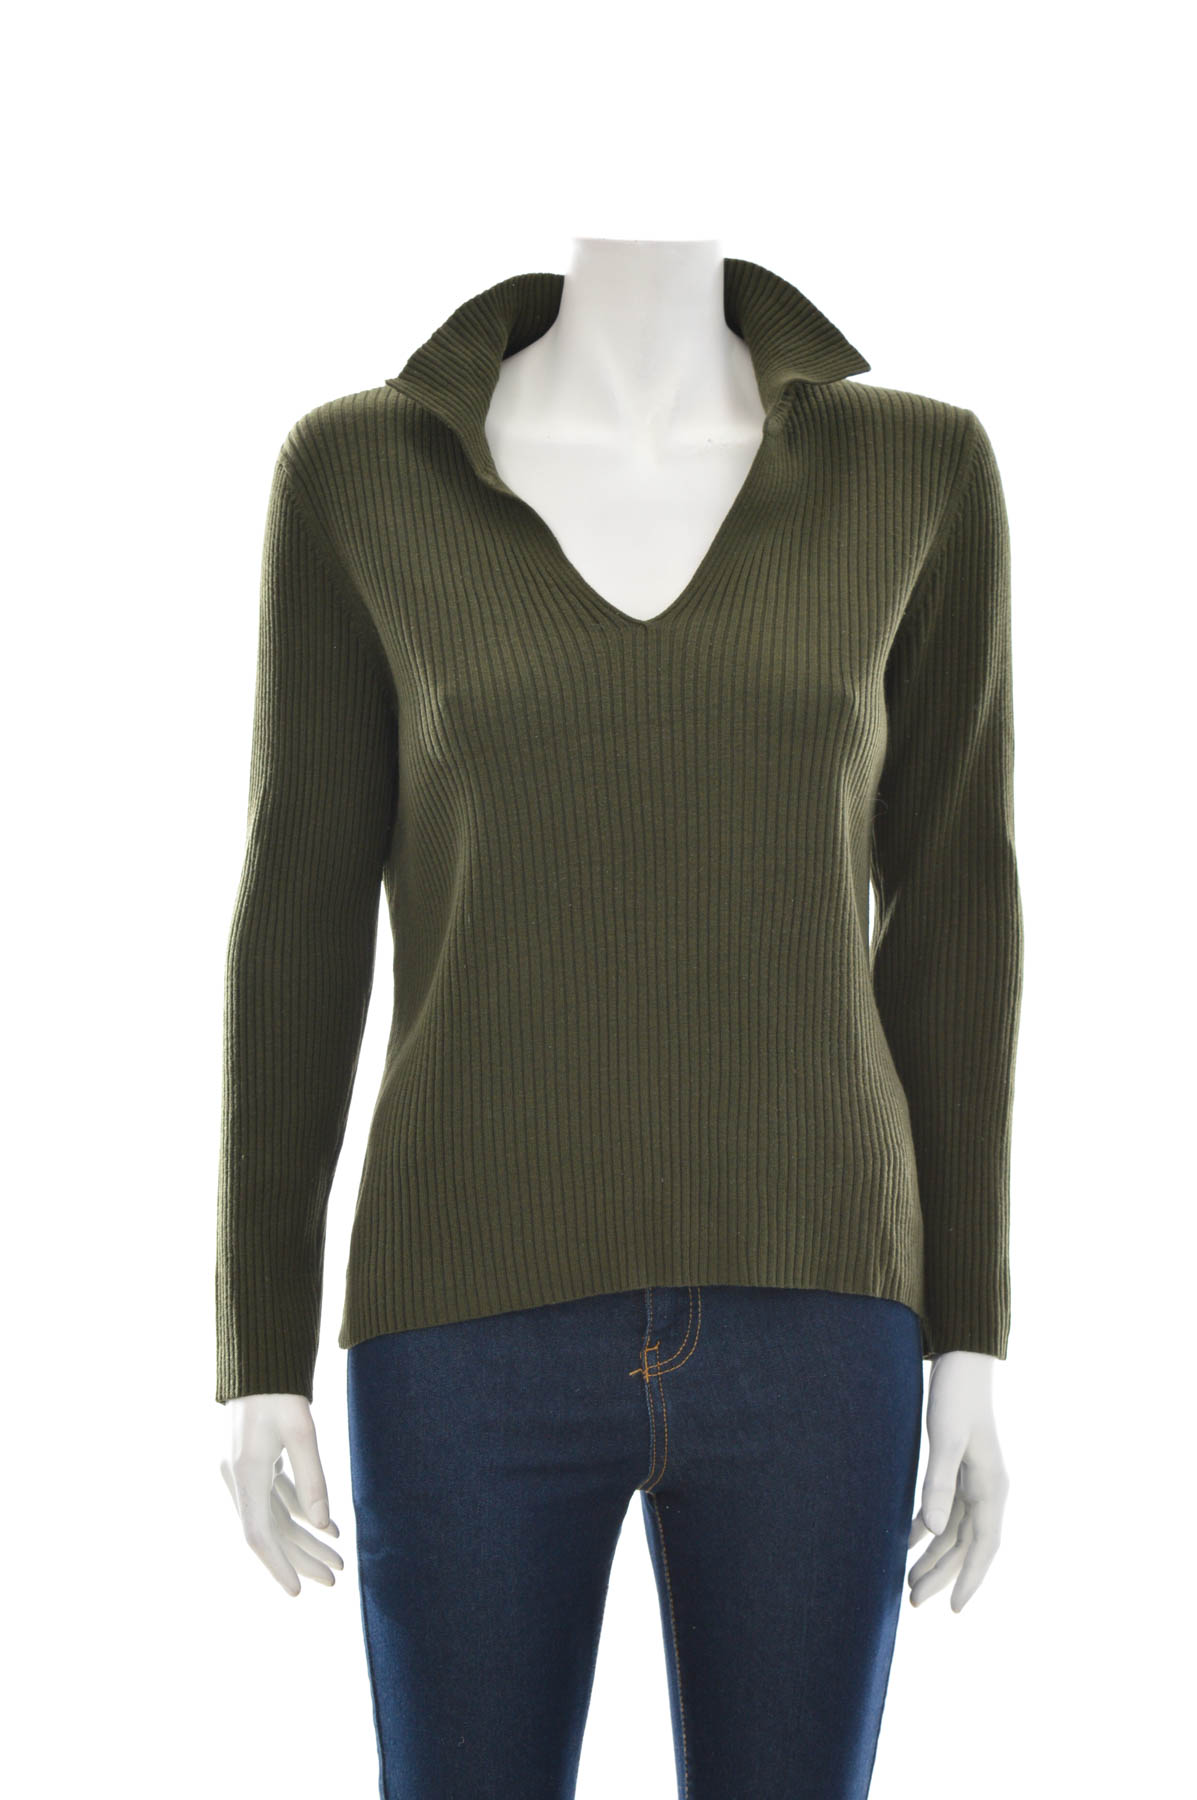 Women's sweater - New York & Company - 0